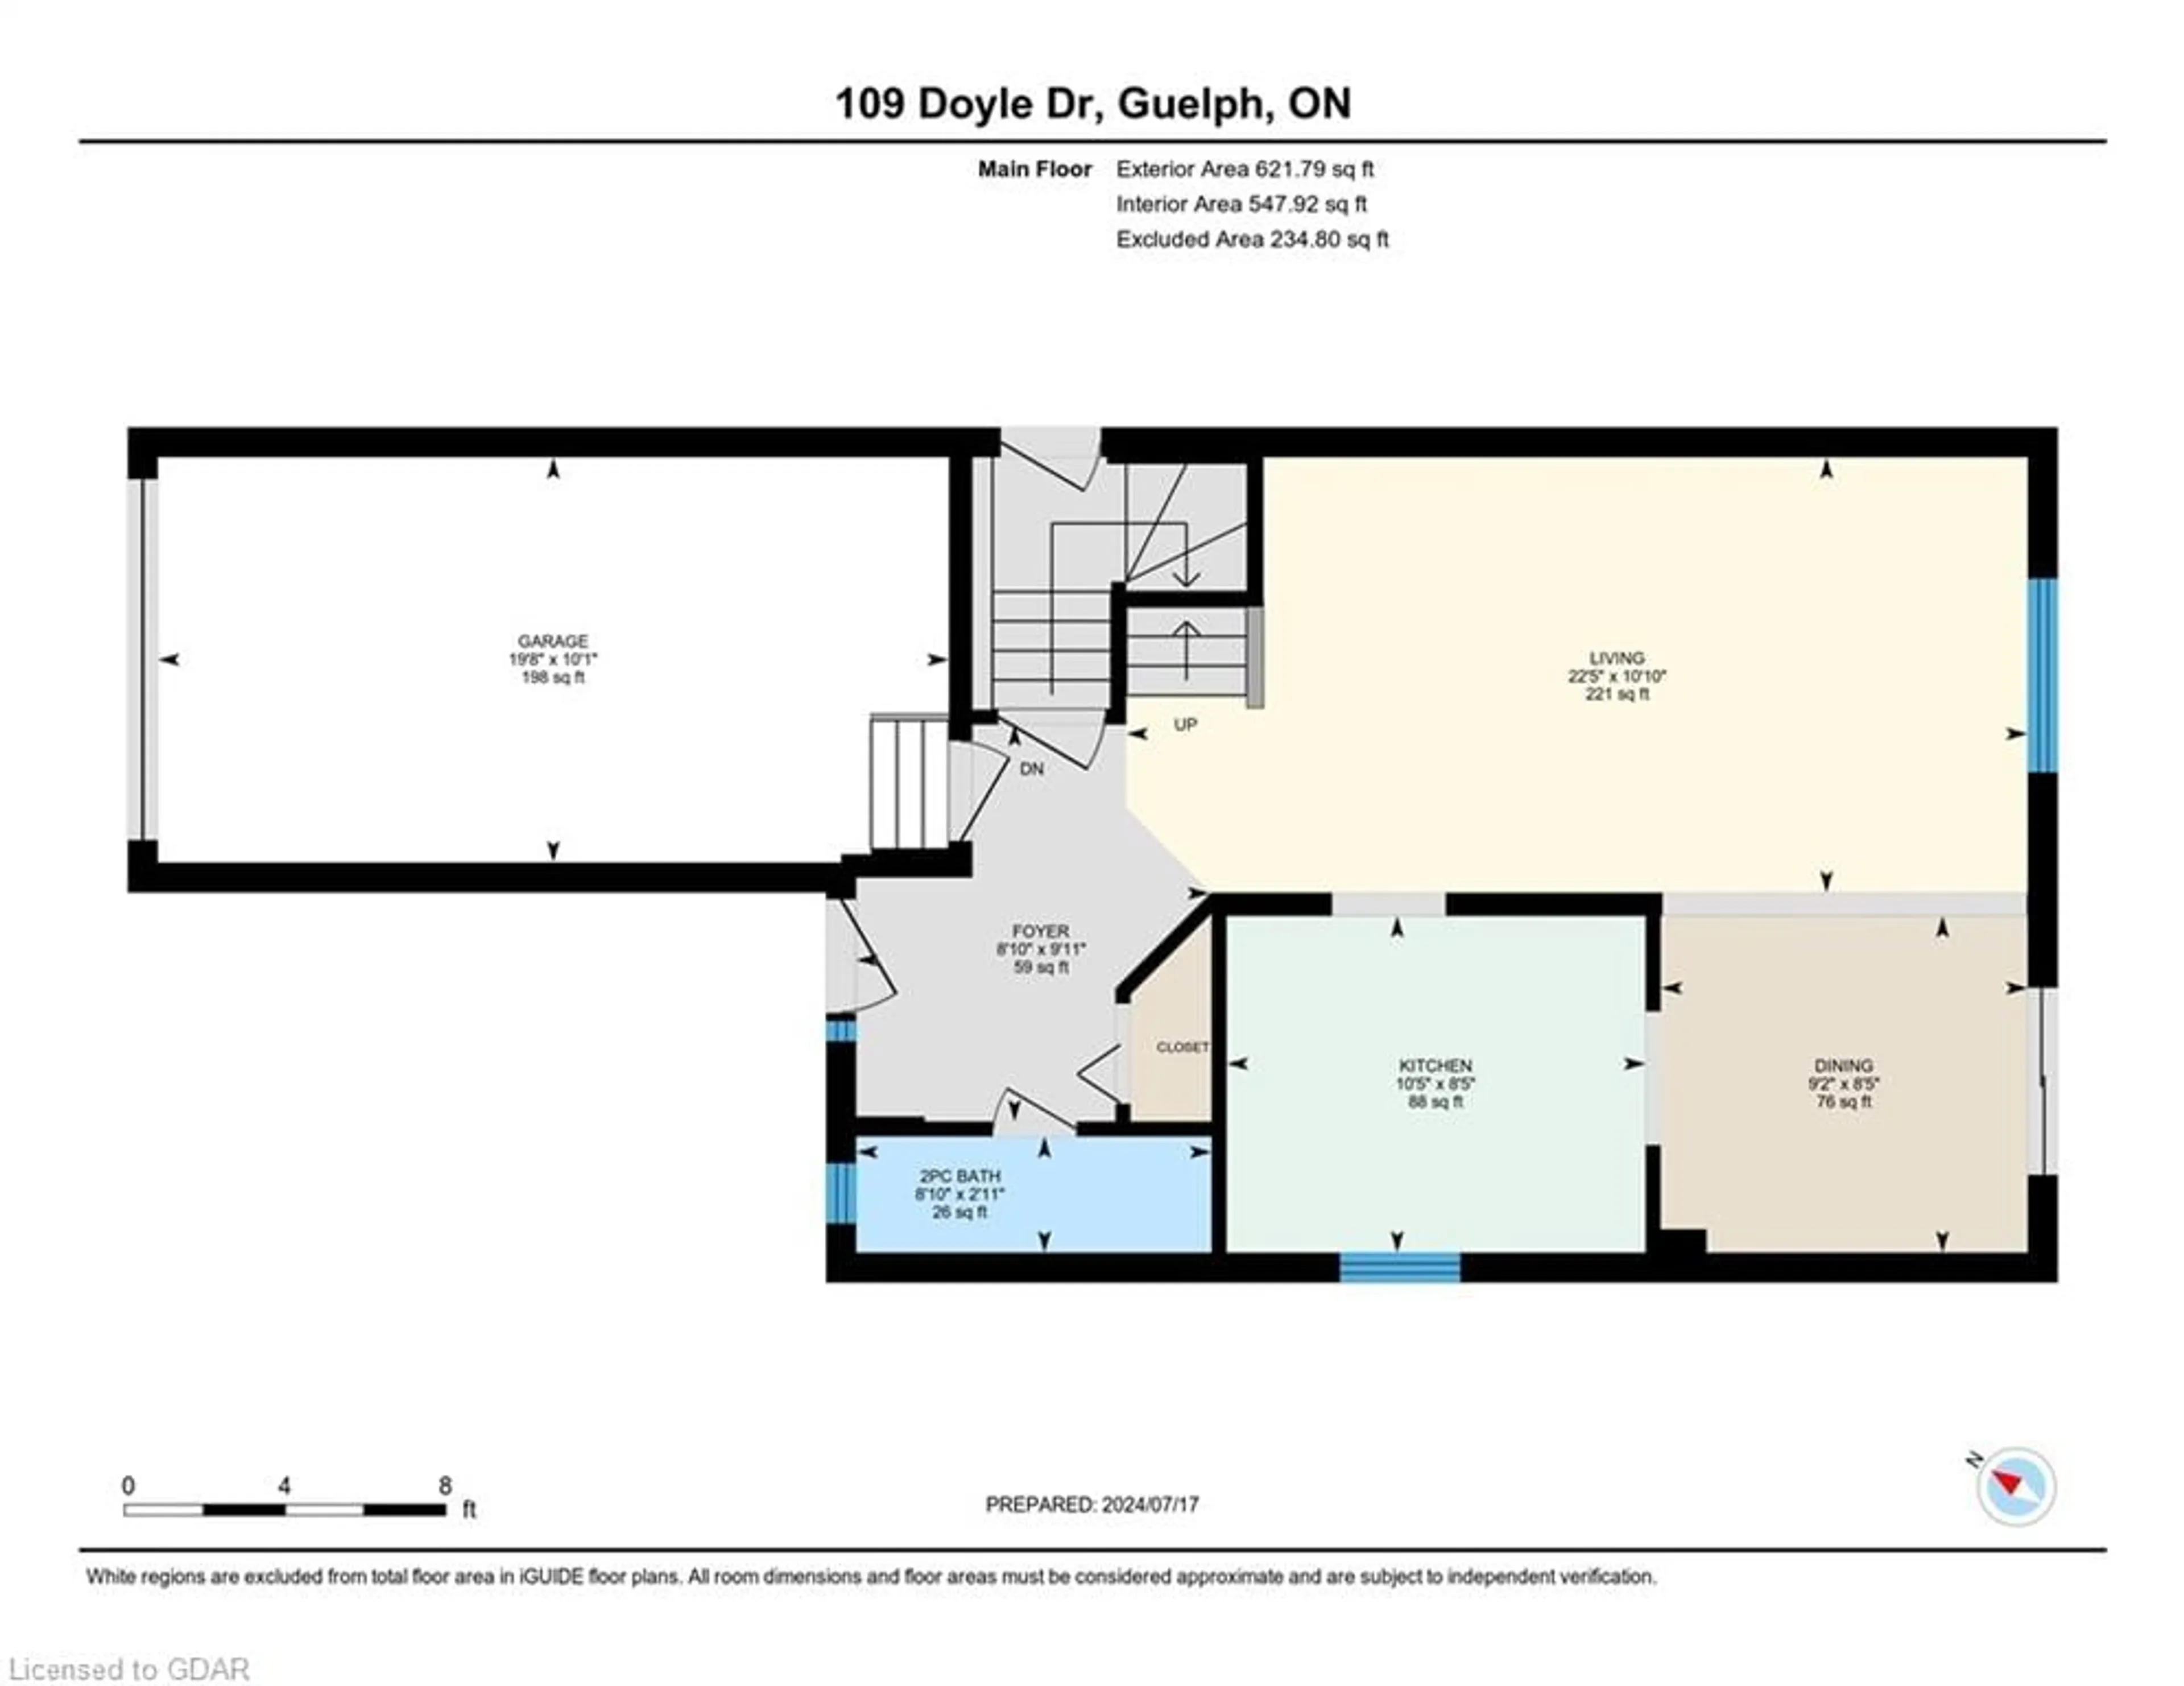 Floor plan for 109 Doyle Dr, Guelph Ontario N1G 5B4